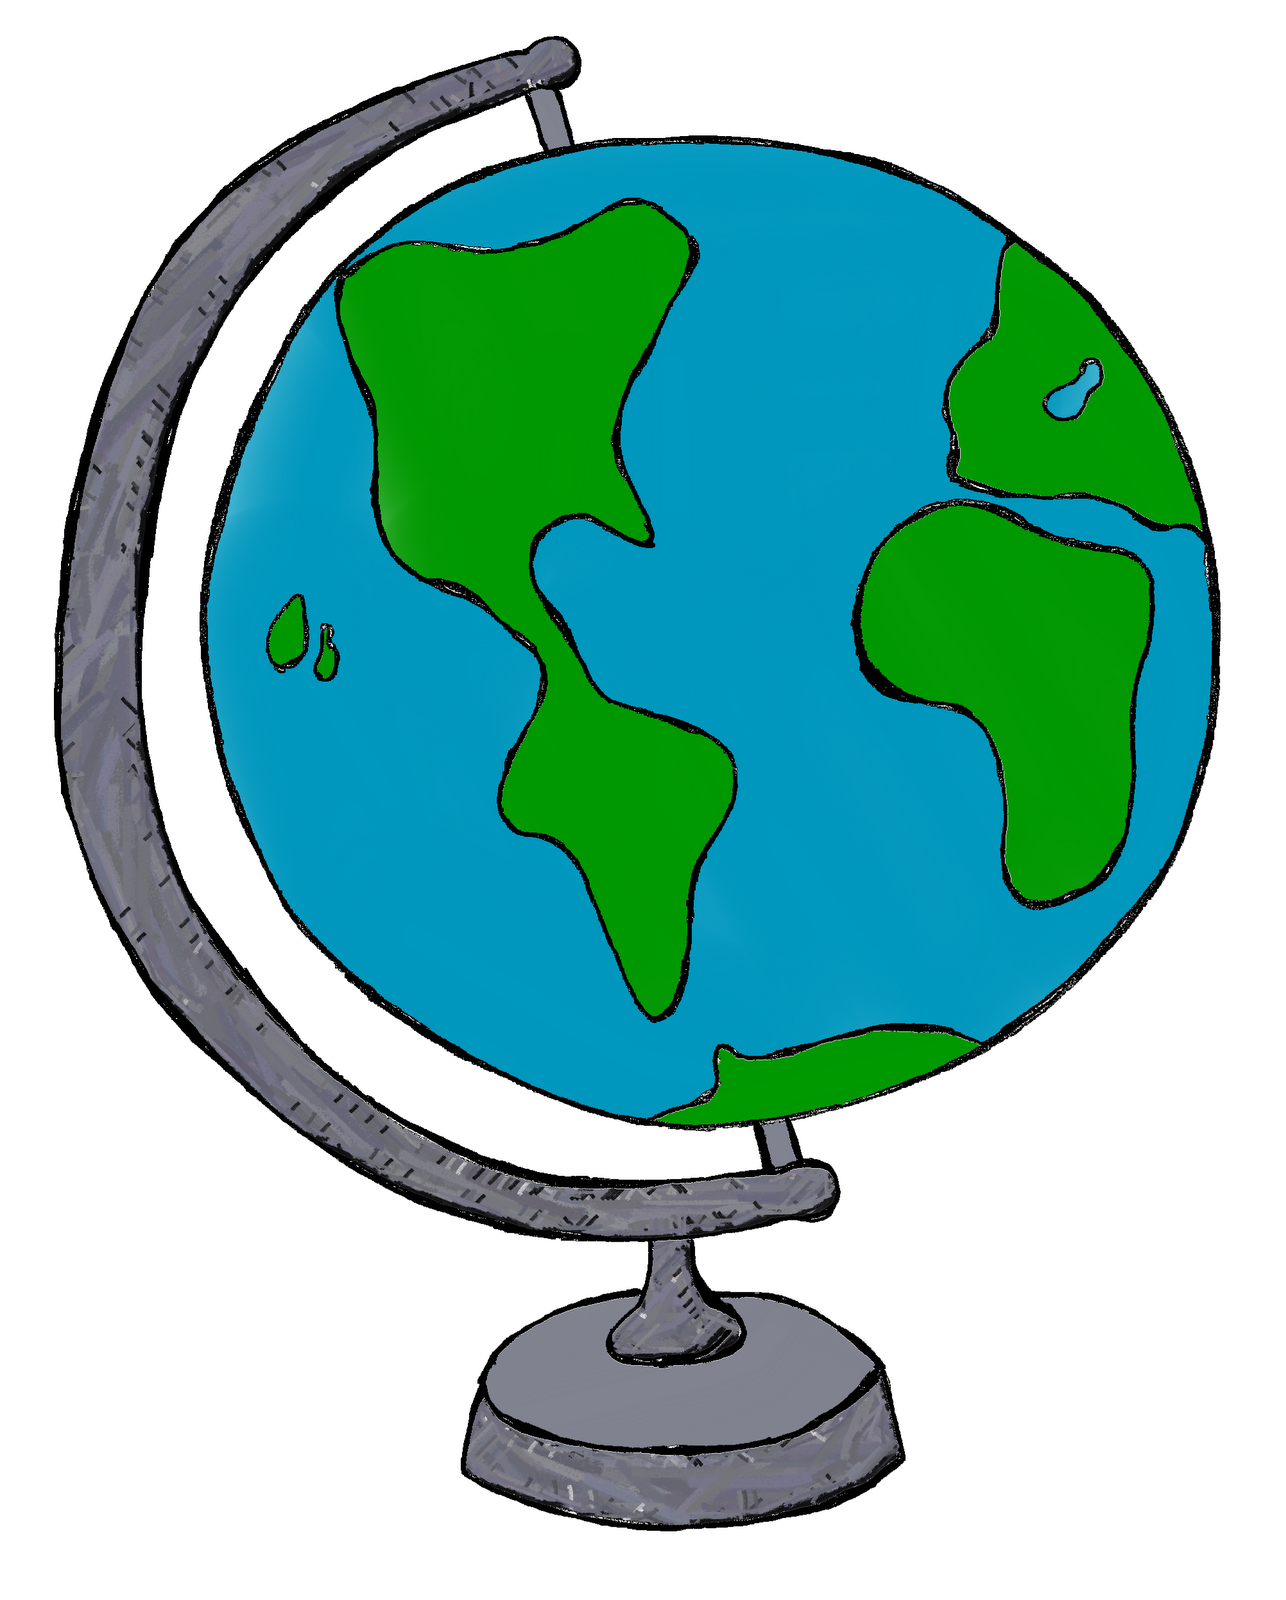 World globe clipart vector